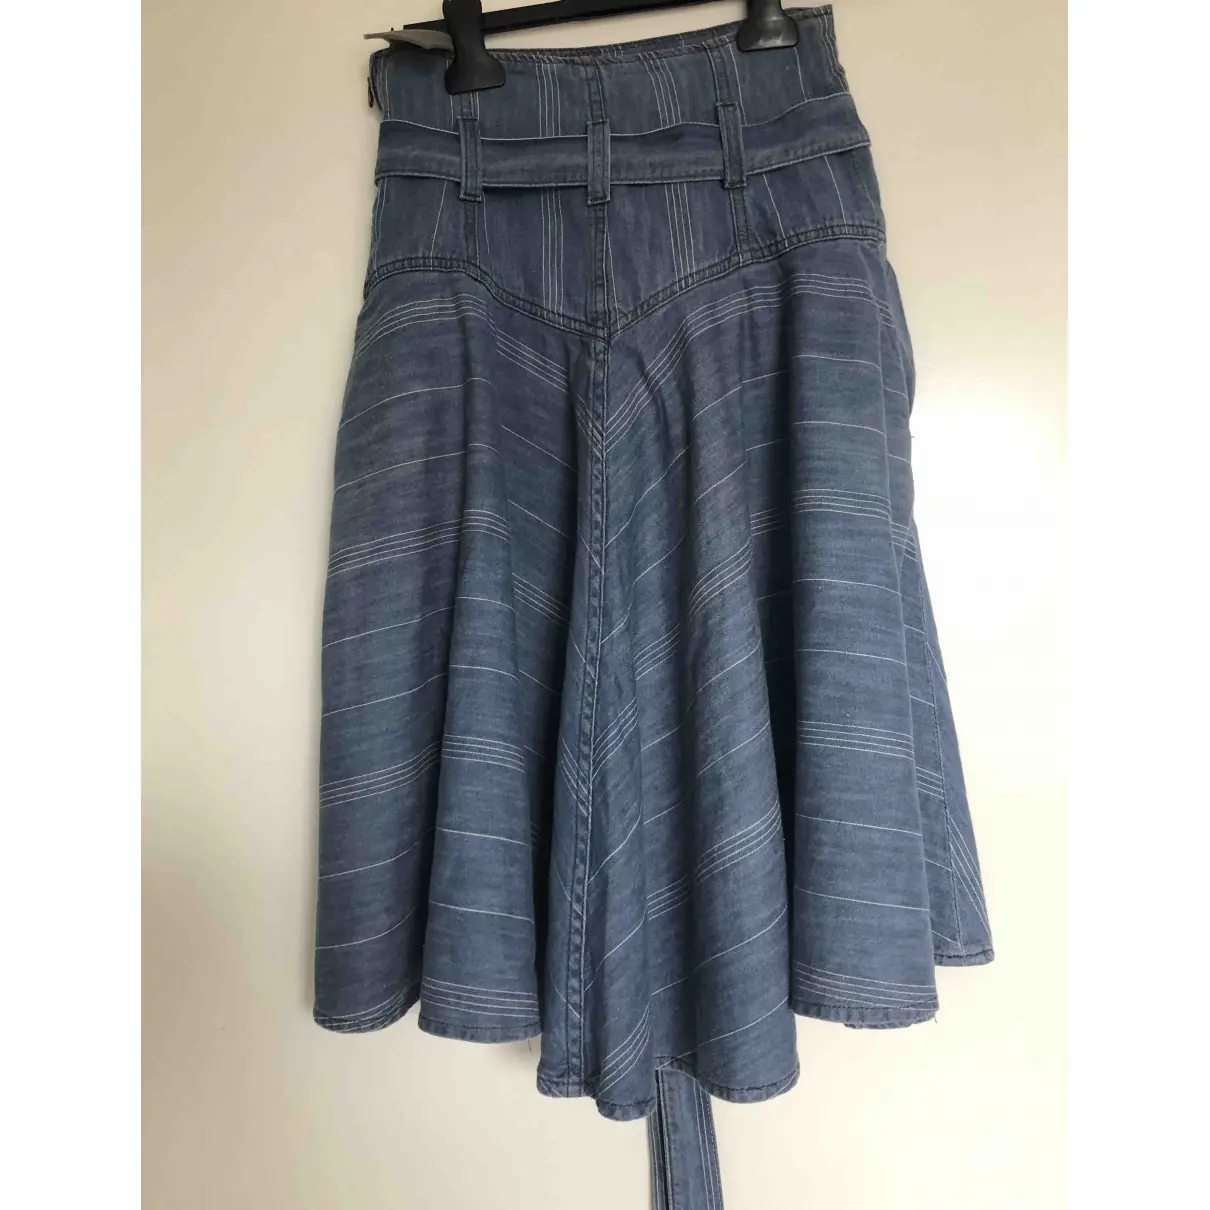 Buy Diesel Mid-length skirt online